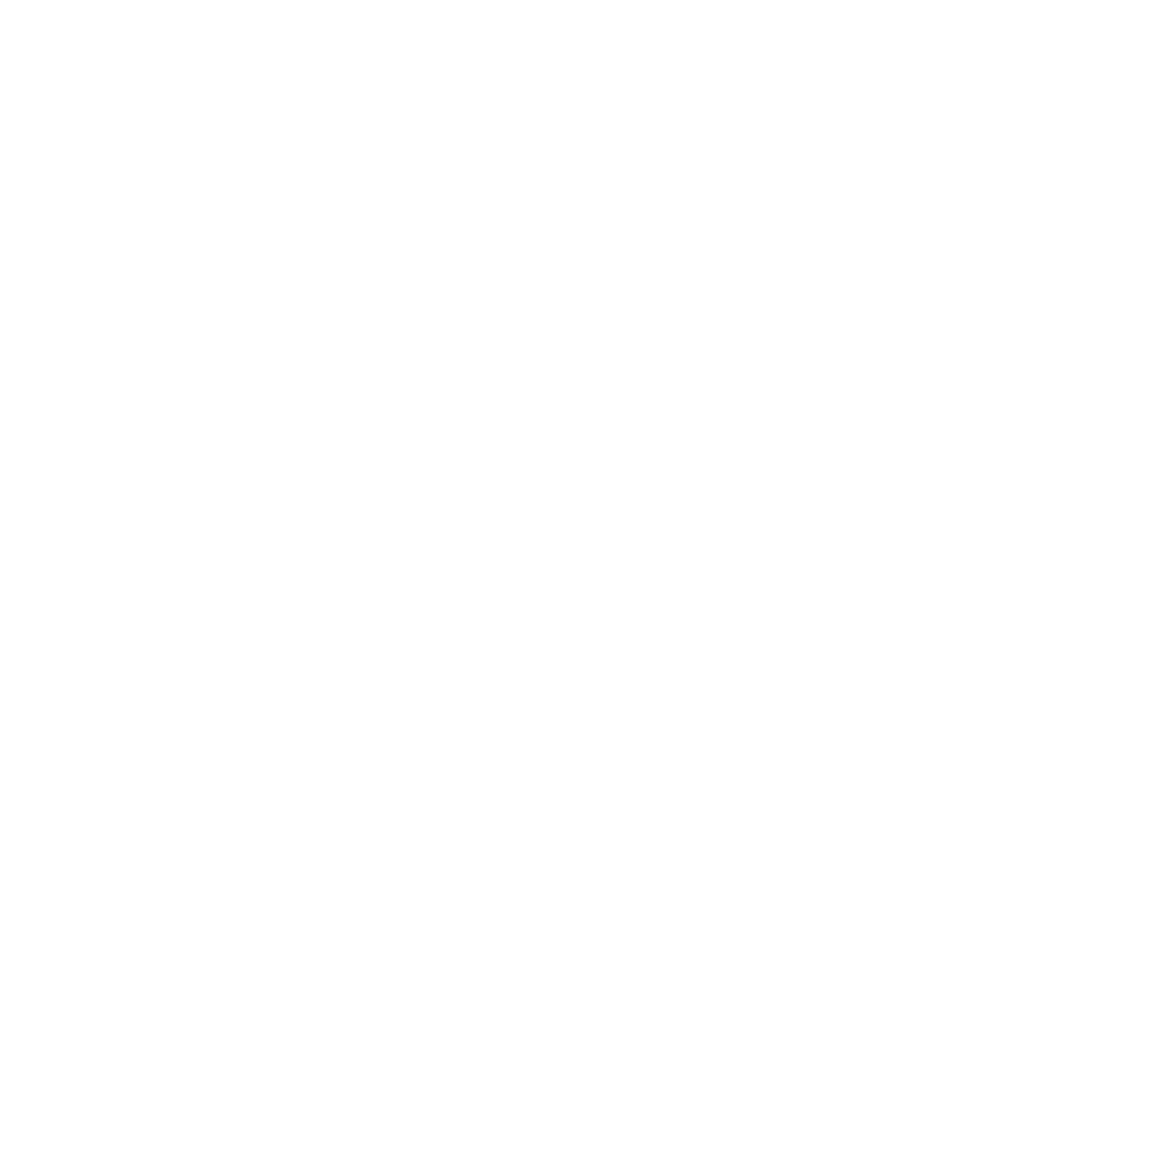 ywam herrnhut logo